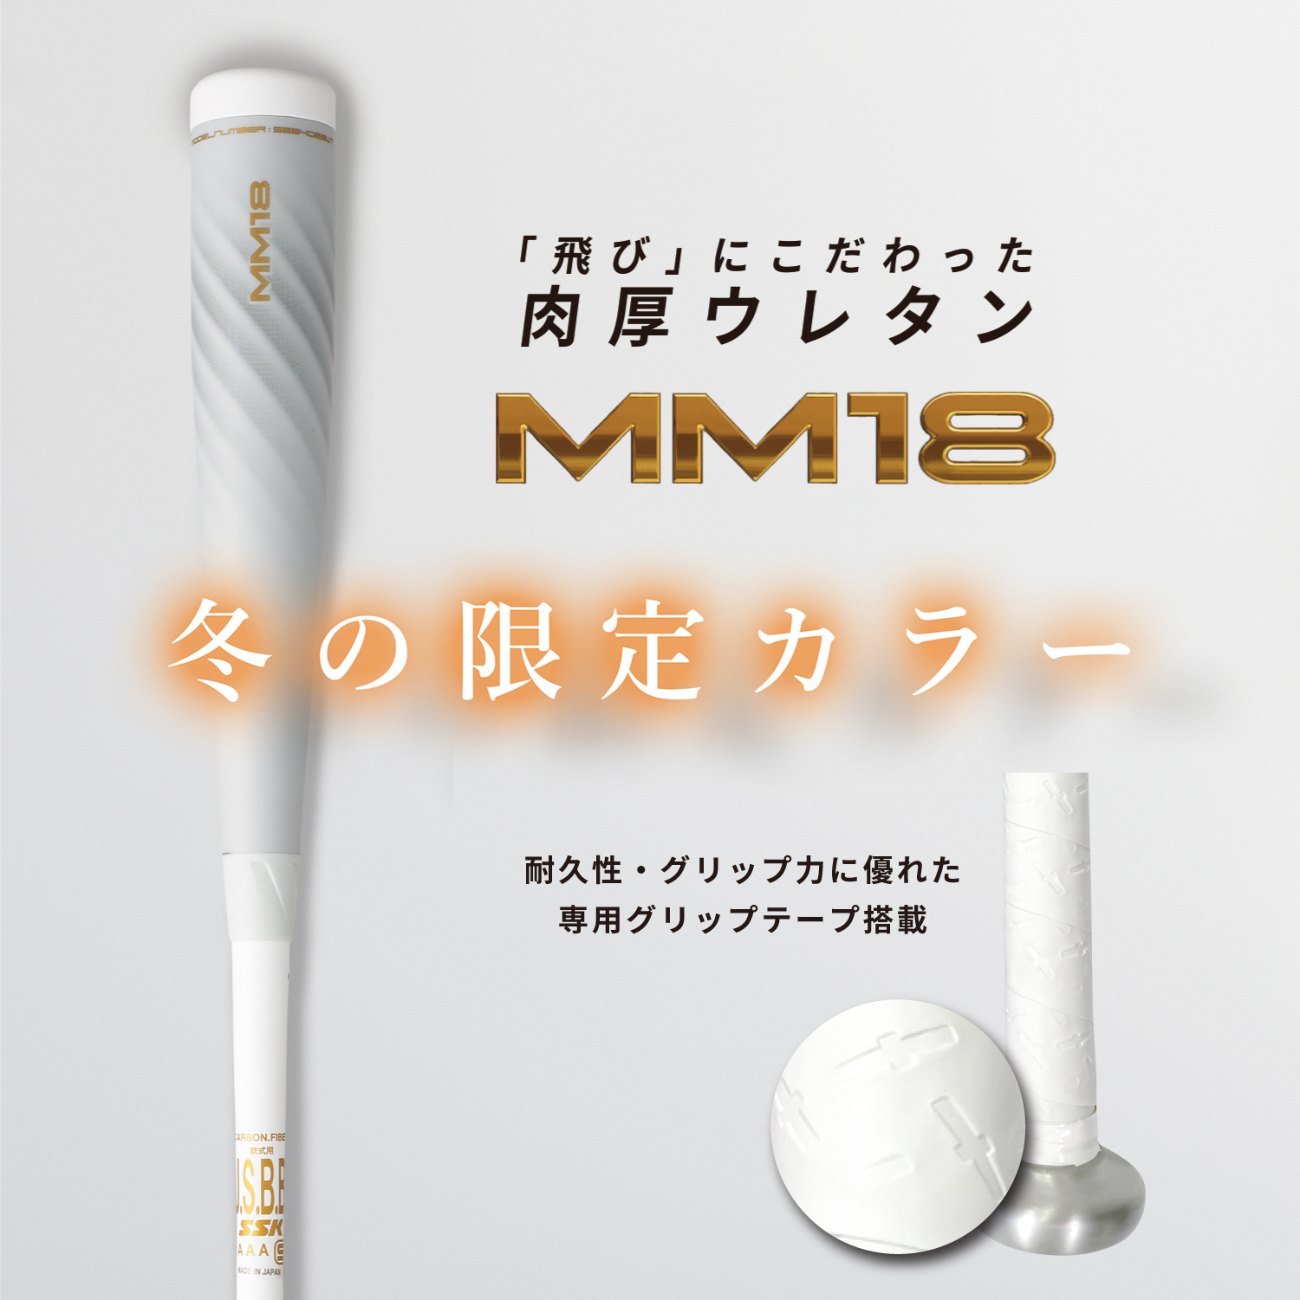 SSK MM18 限定カラー ホワイト トップバランス 83cm 710g - バット